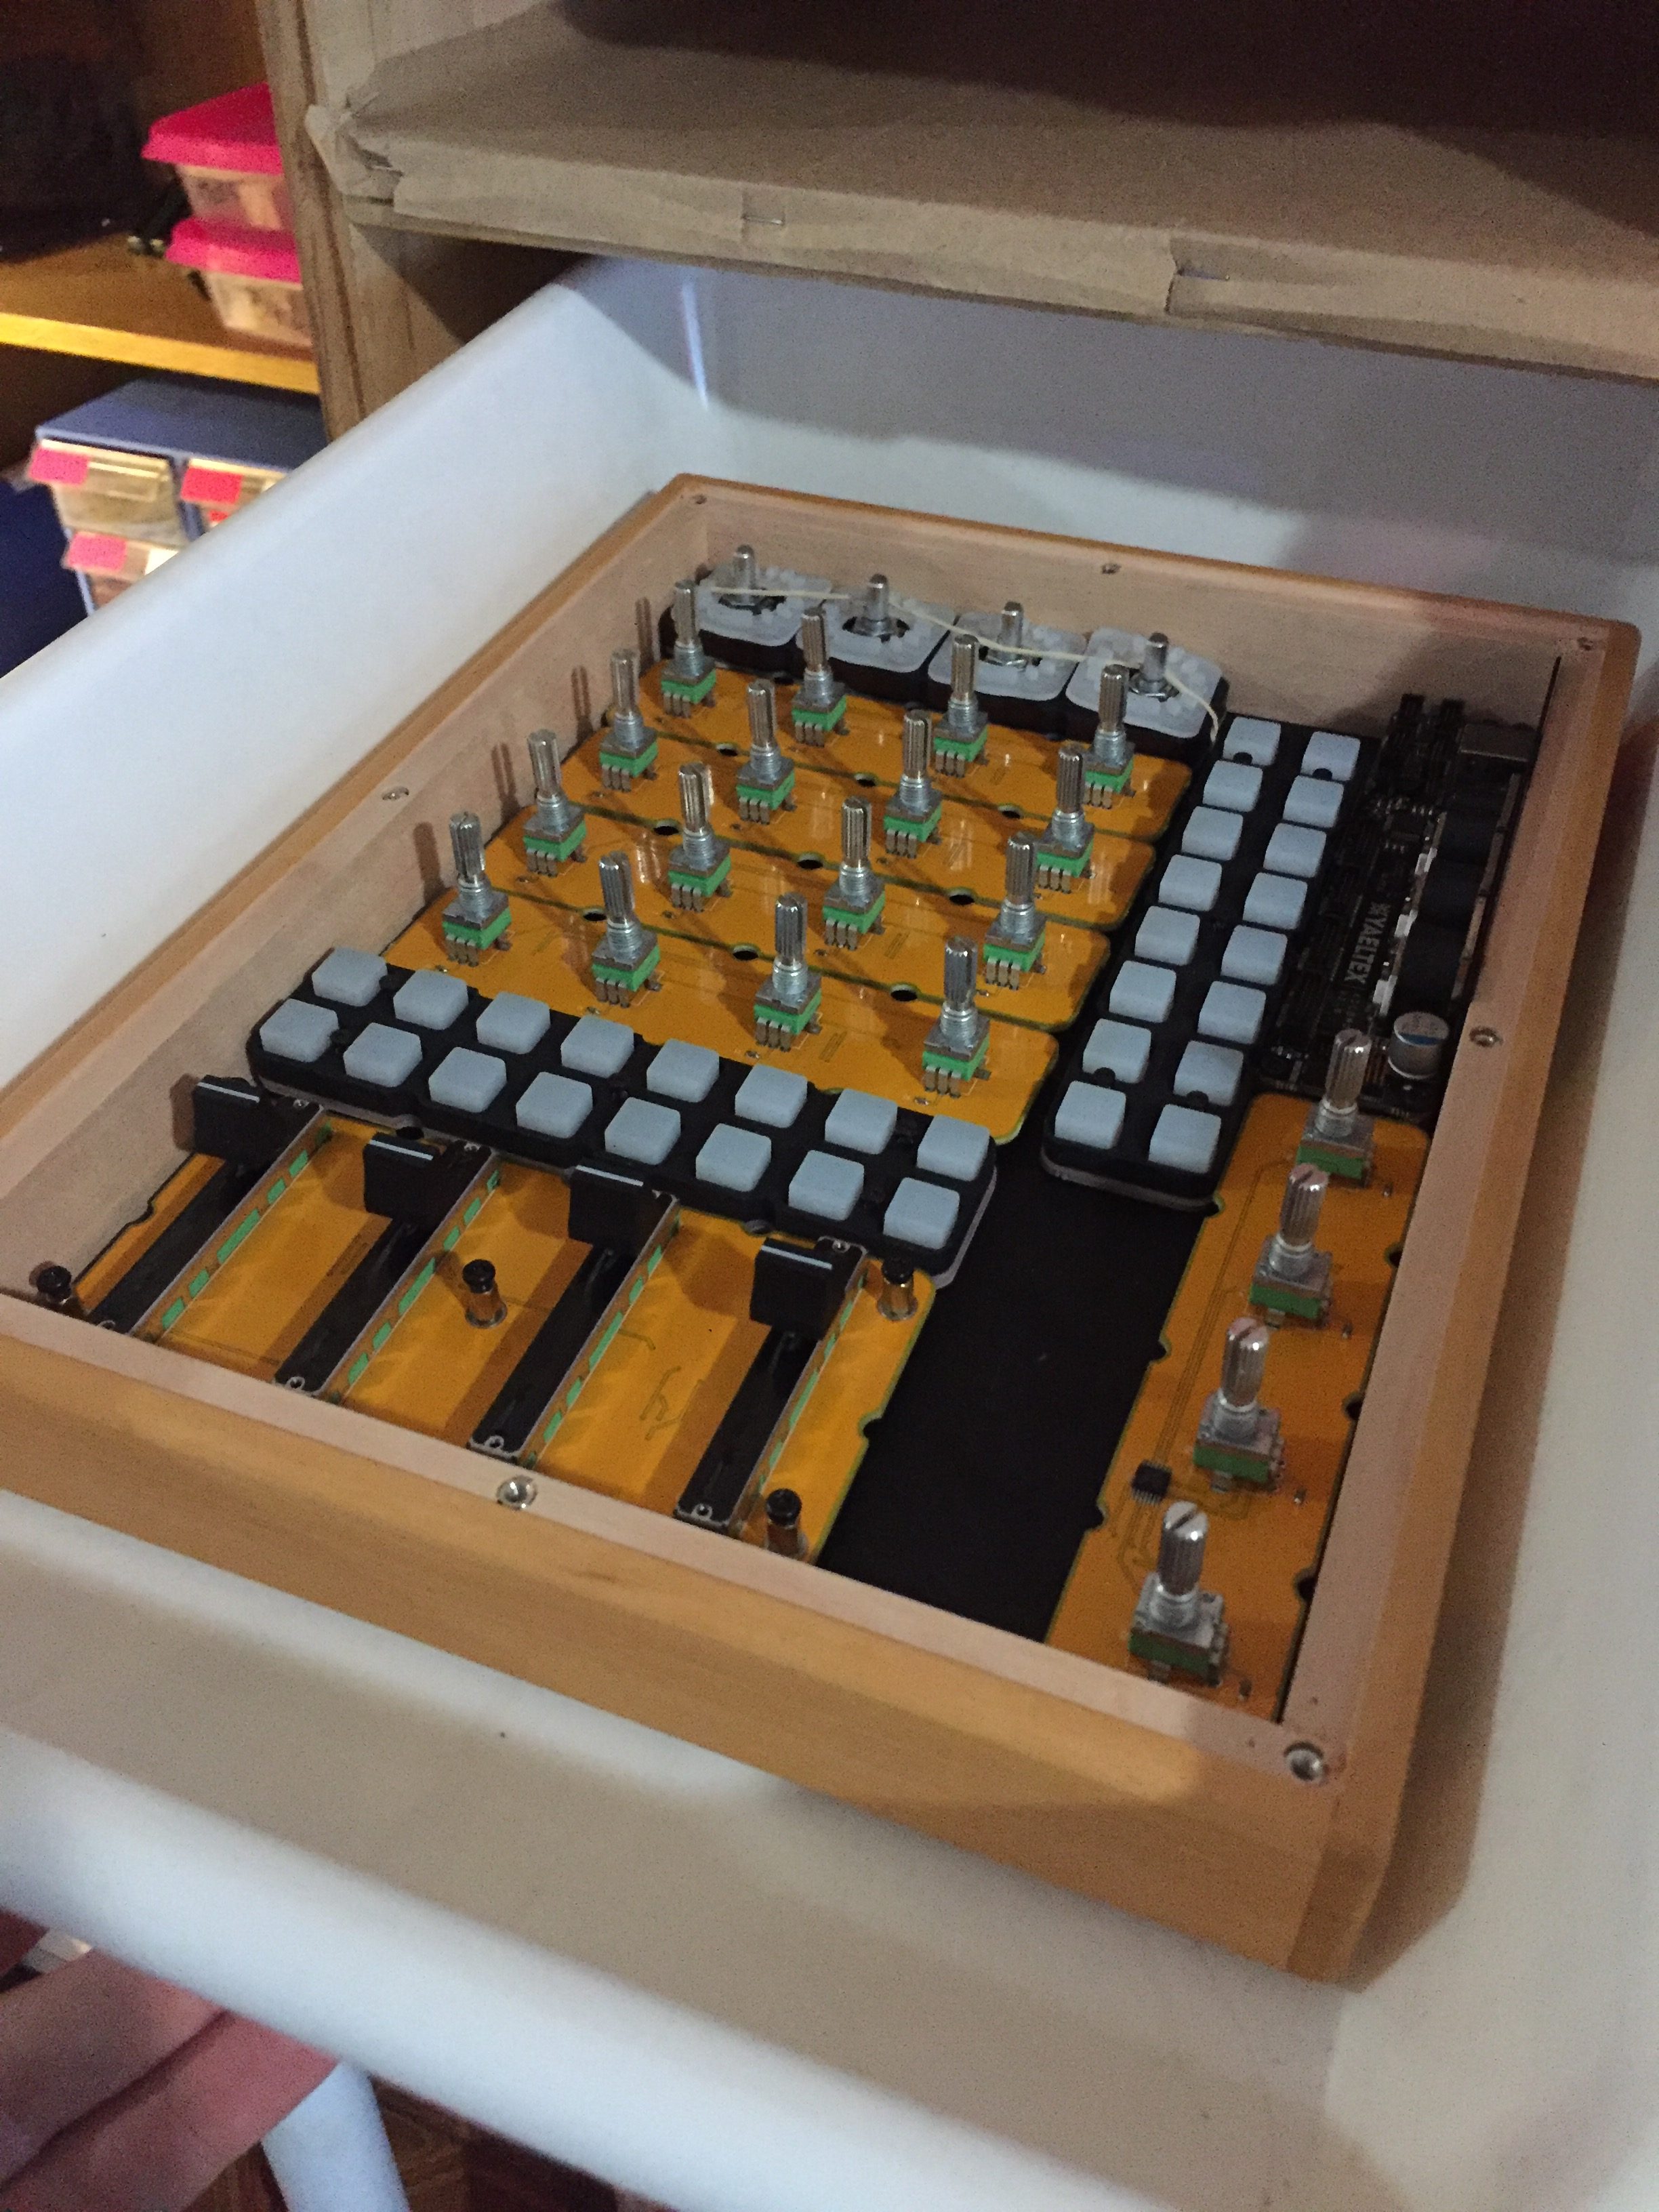 Yaeltex expand custom MIDI controller range